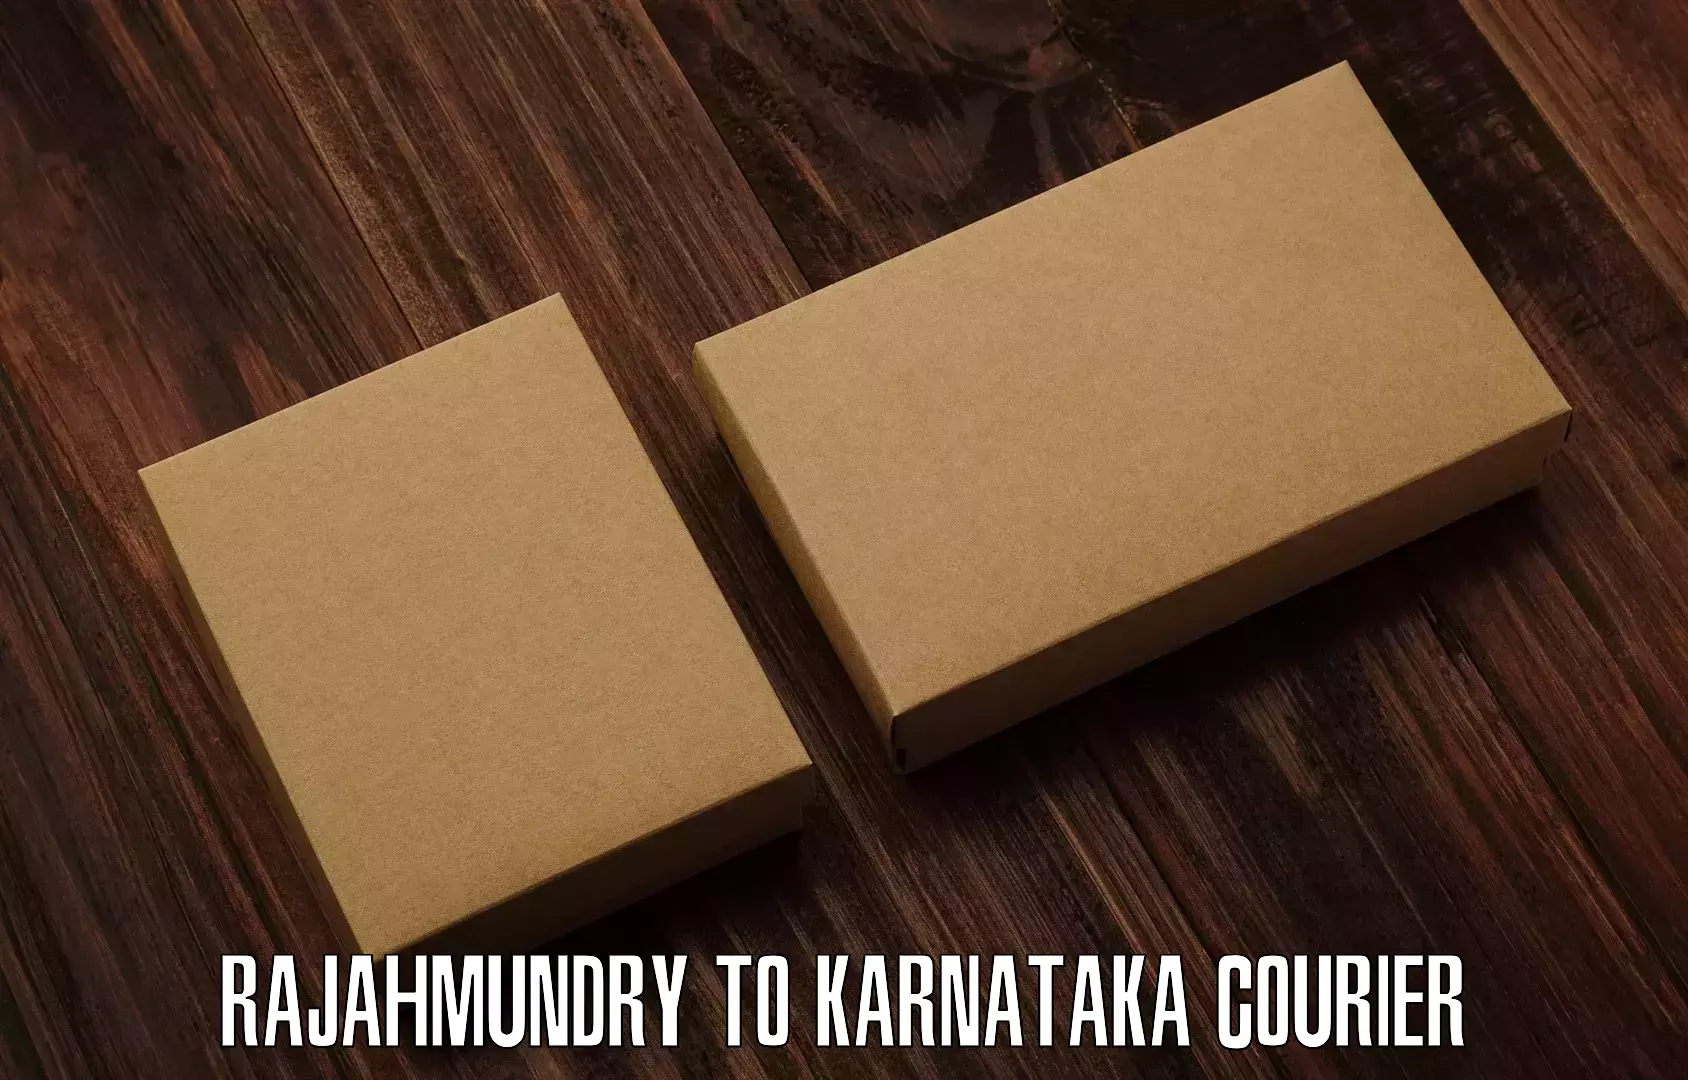 24/7 courier service Rajahmundry to Mysore